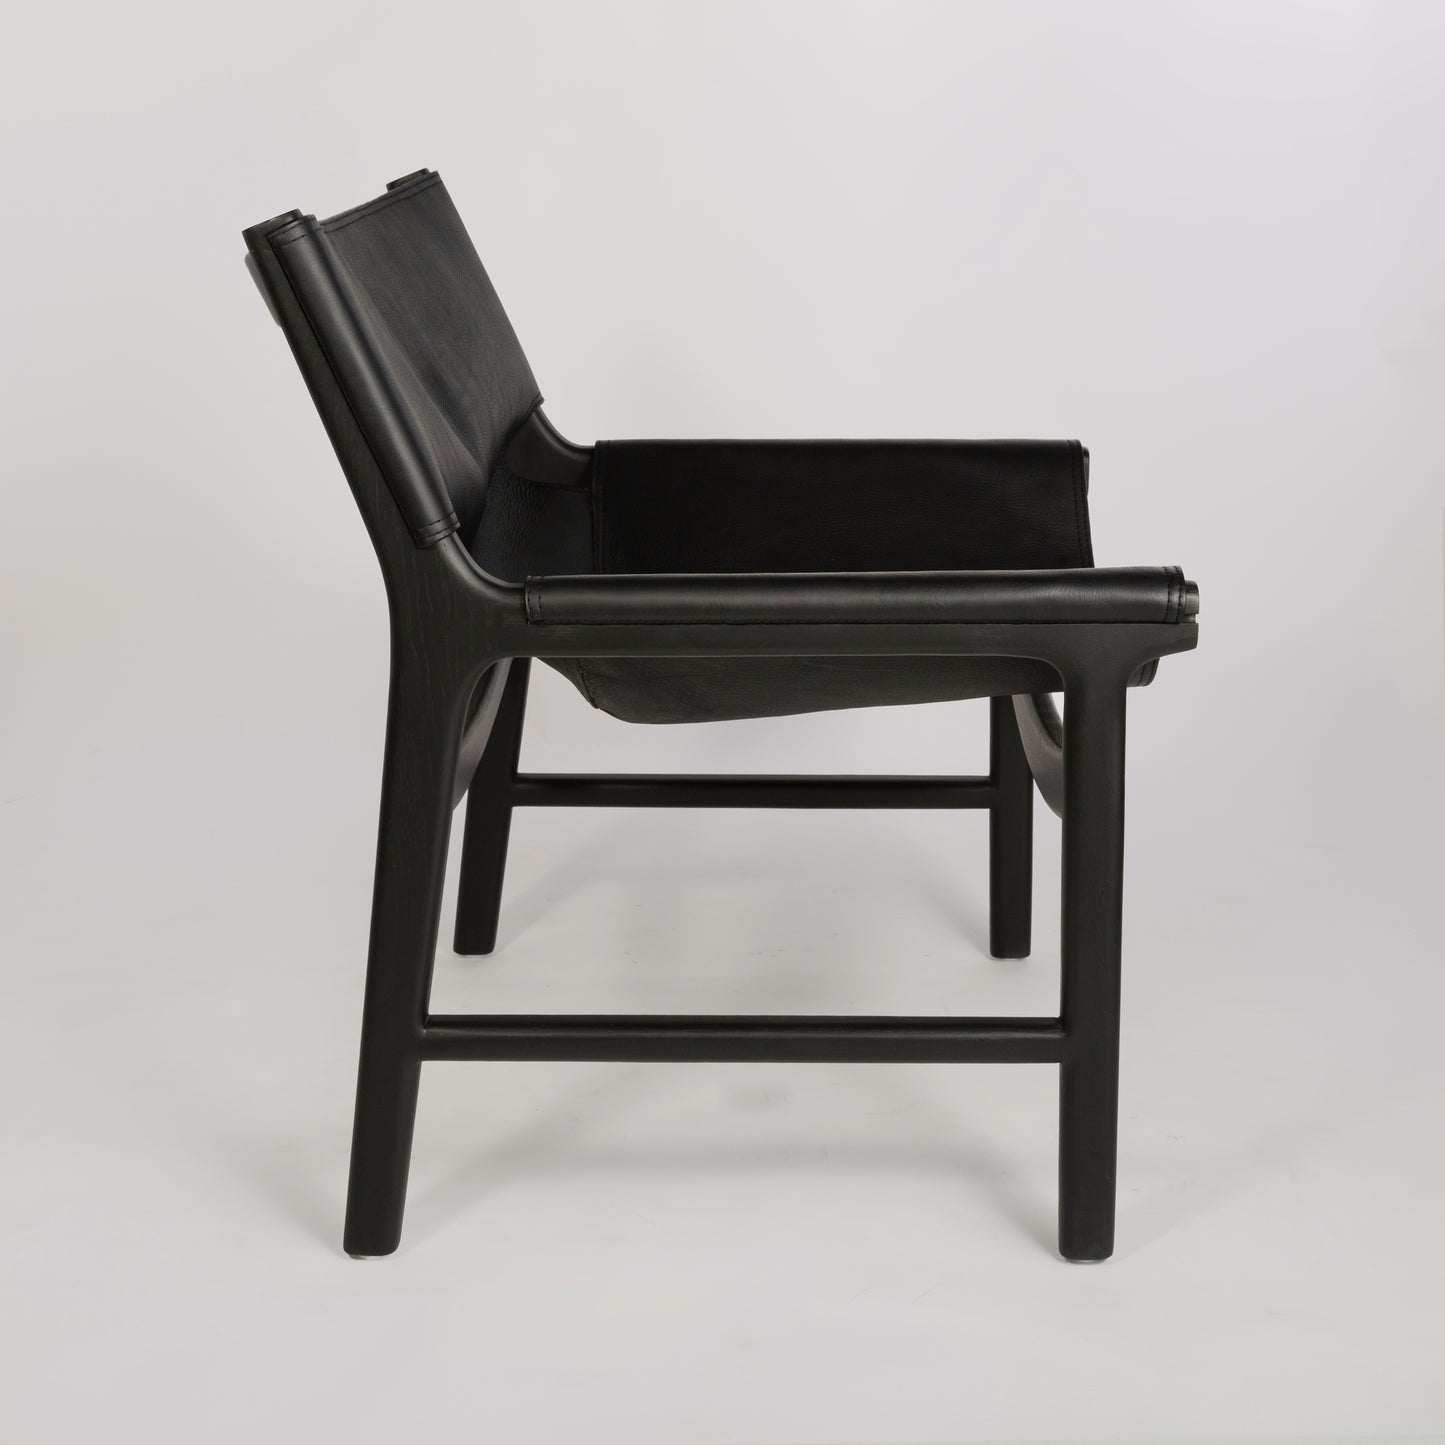 Ojai Lounge chair